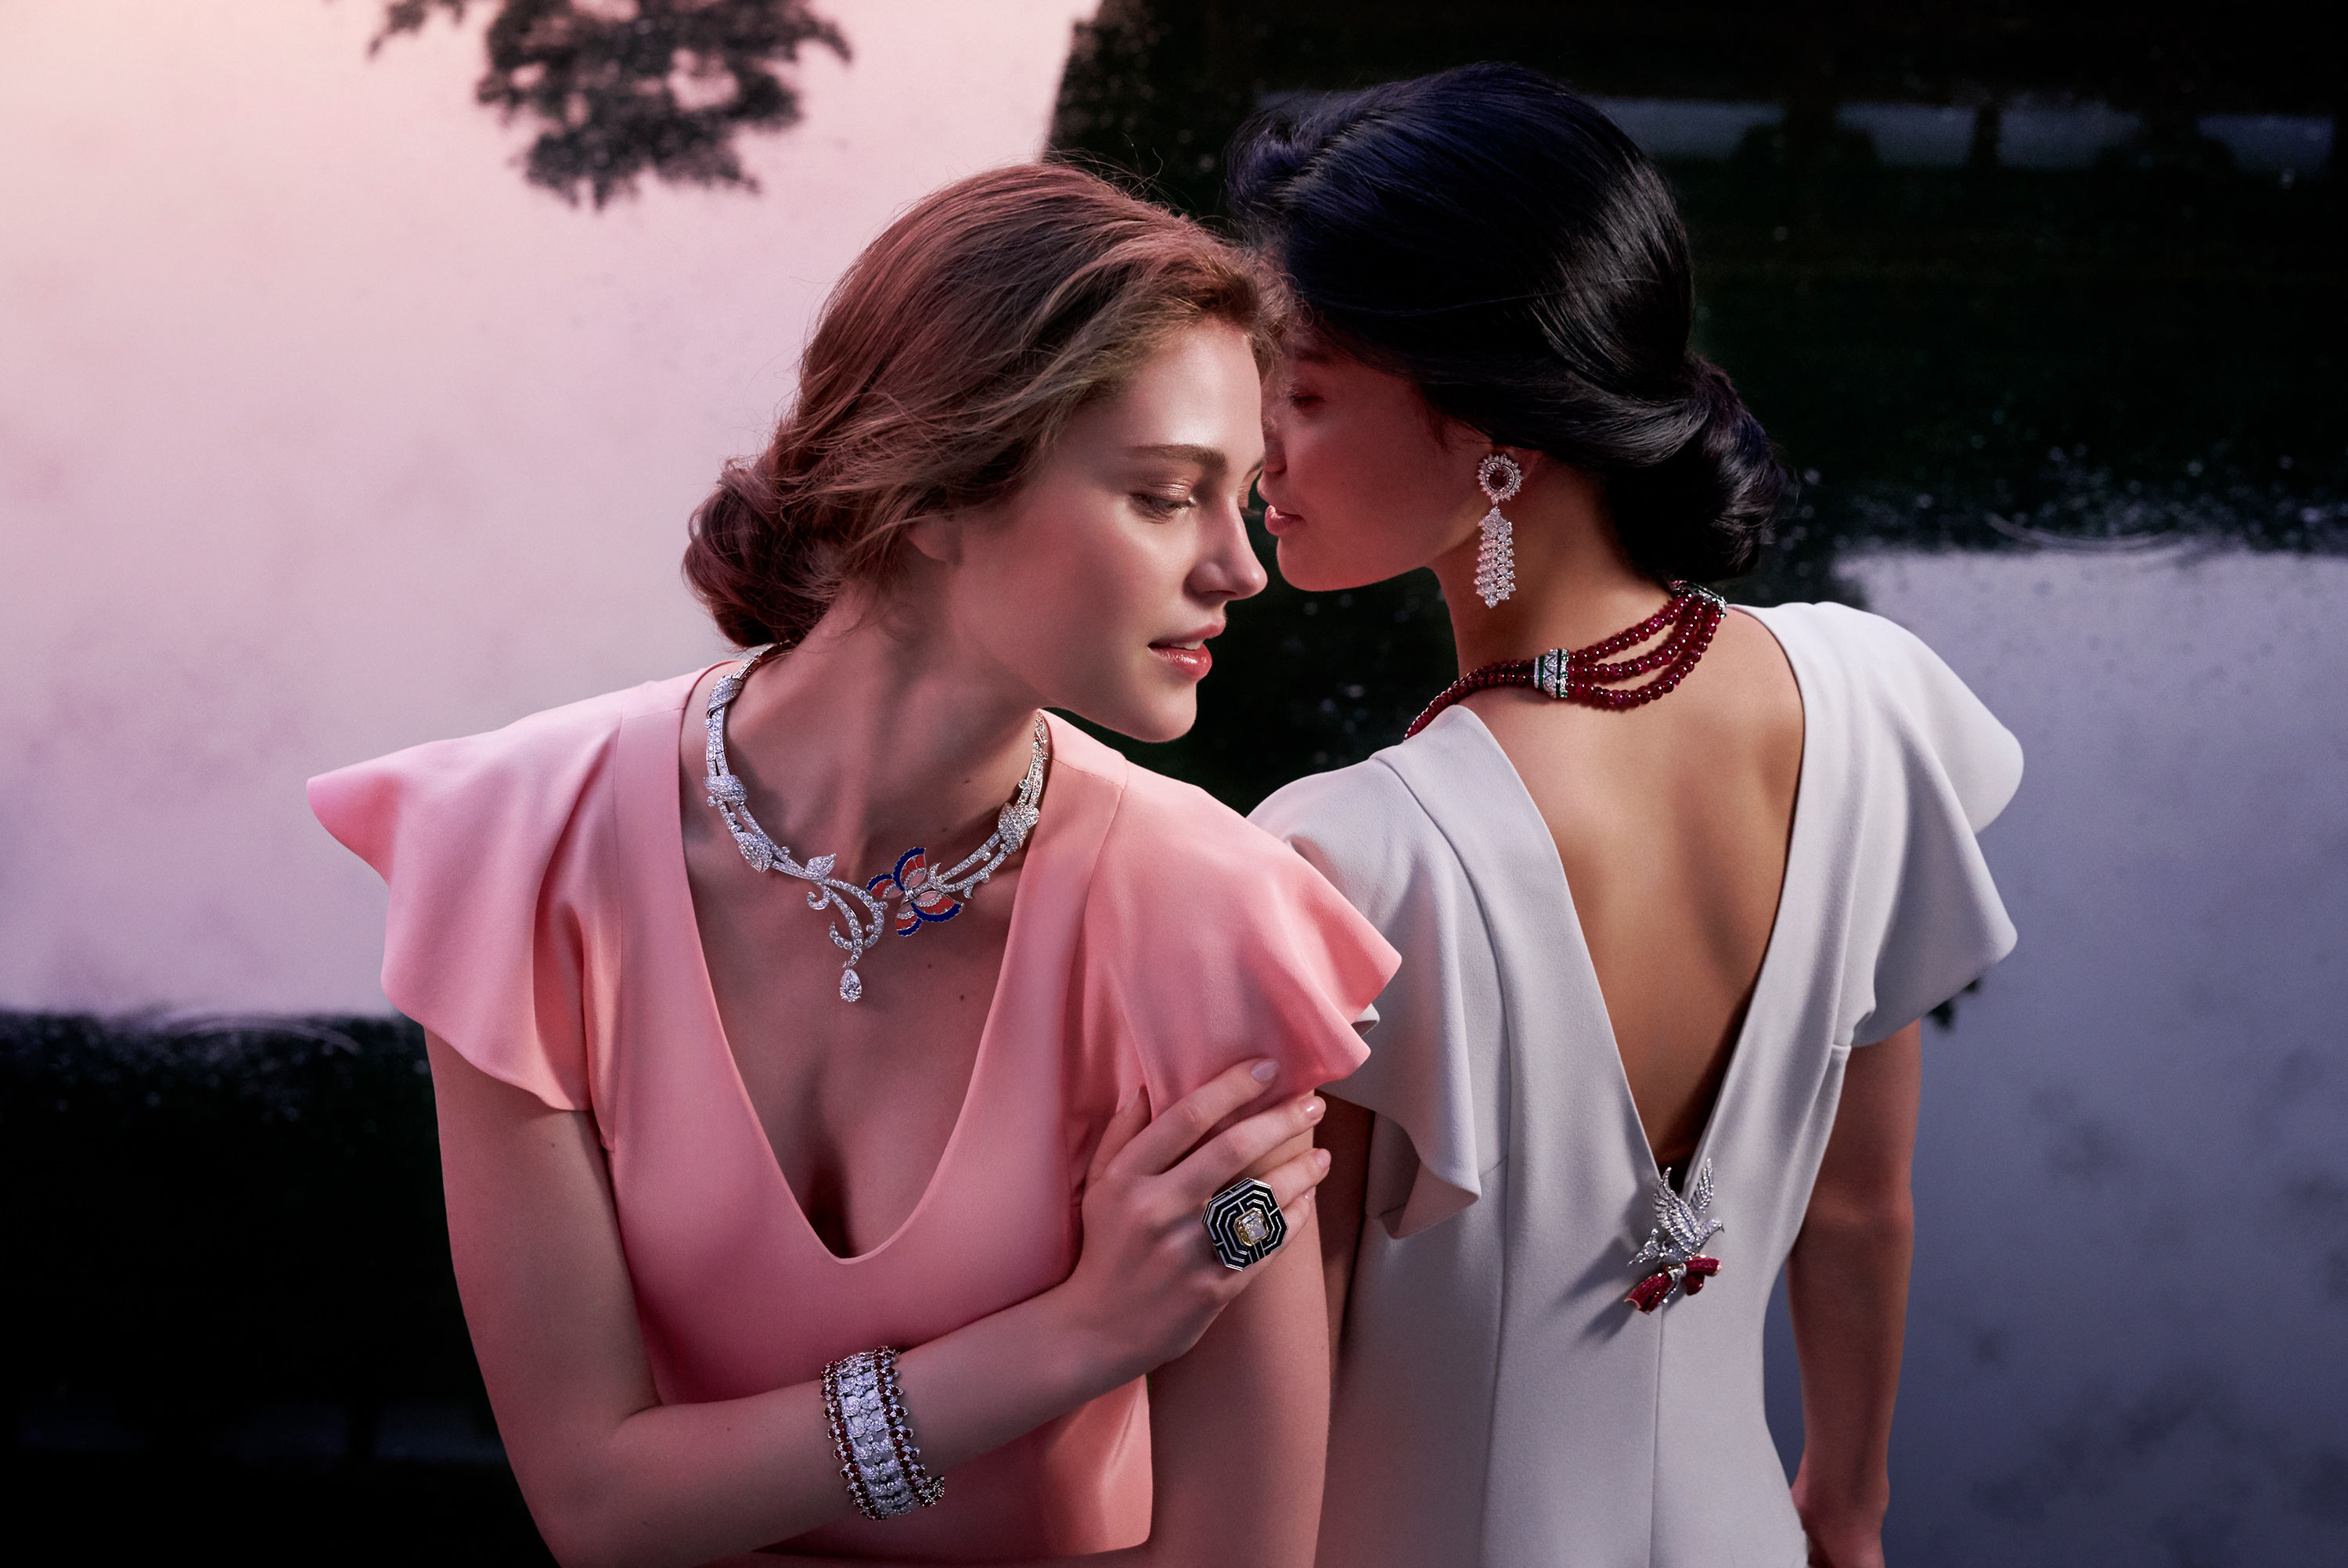 Van Cleef & Arpels reveals its new Le Secret high jewellery collection